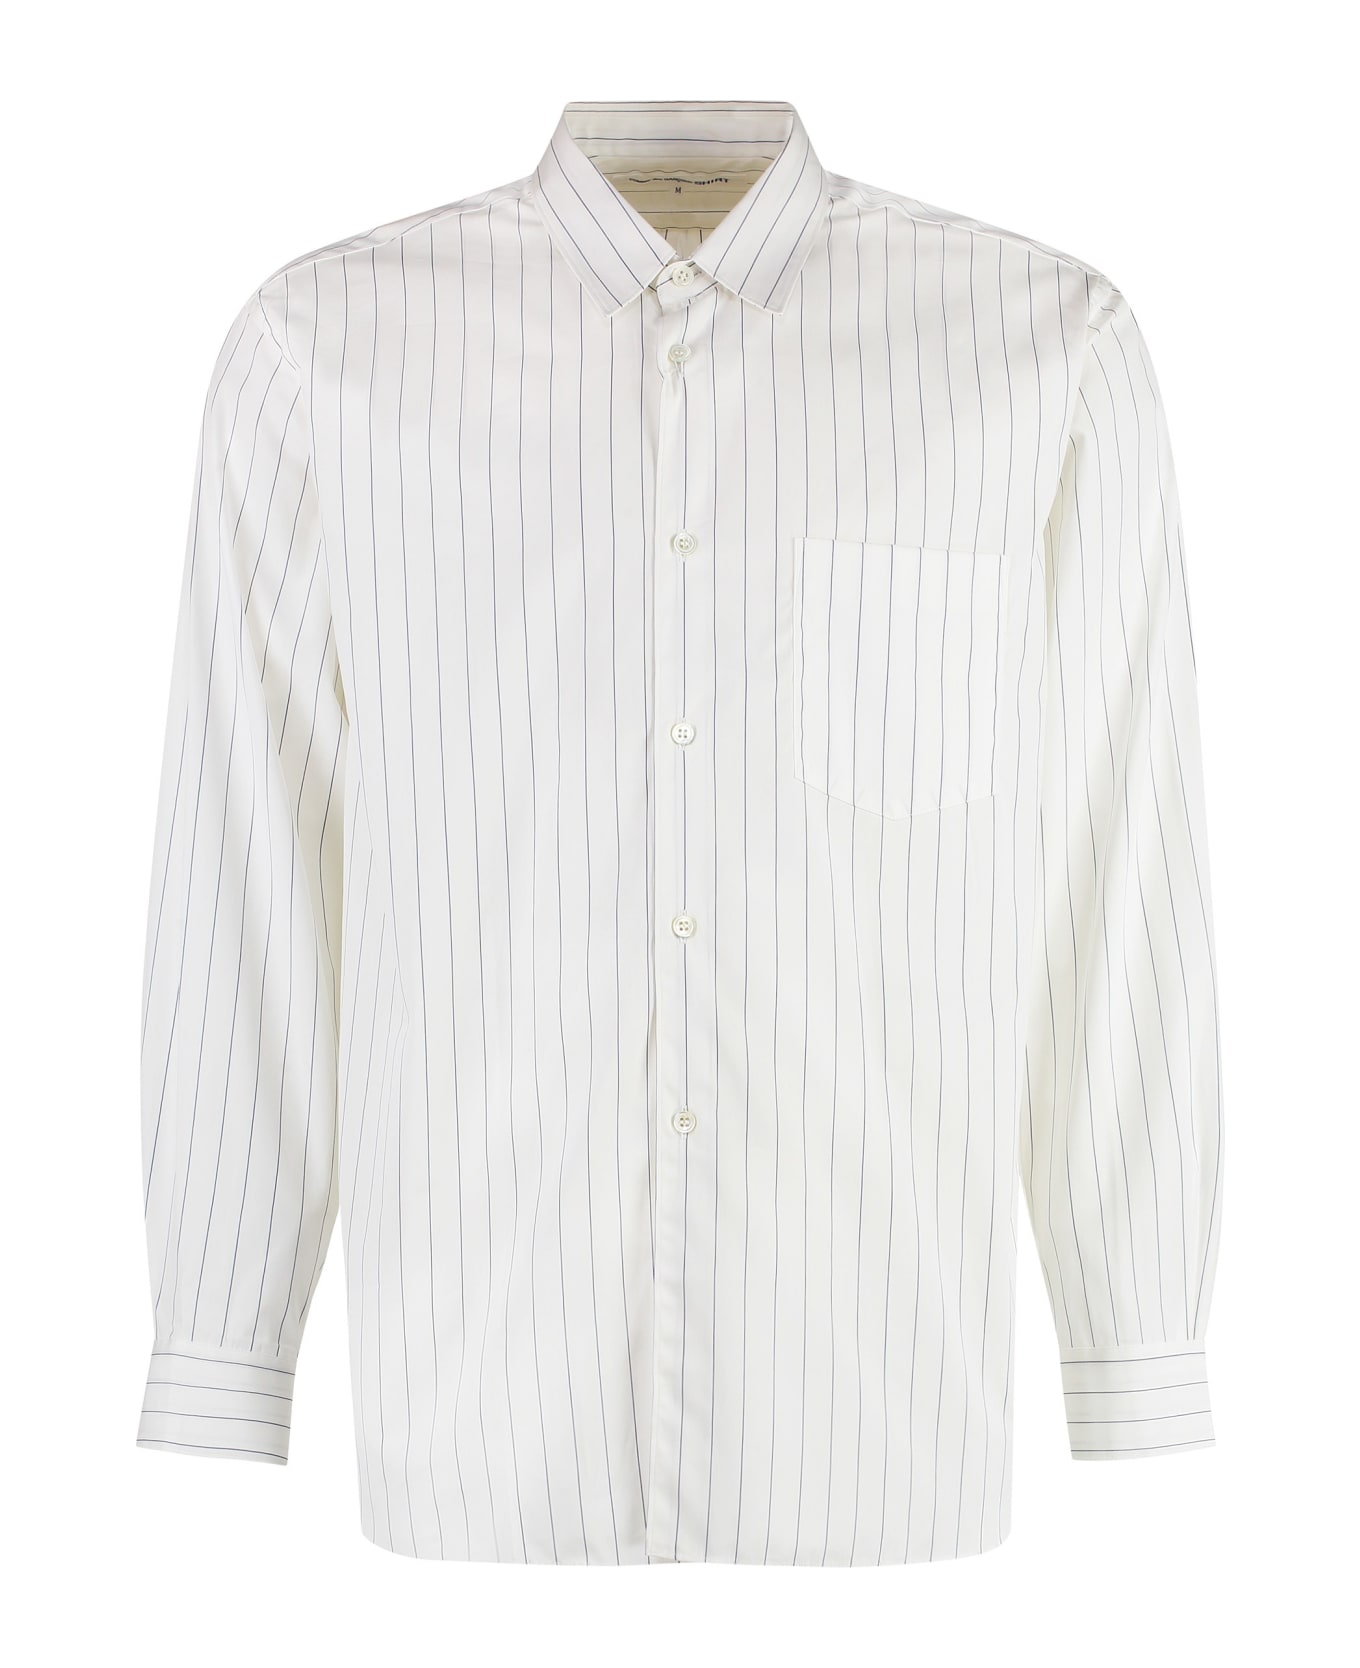 Comme des Garçons Shirt Striped Shirt - White シャツ